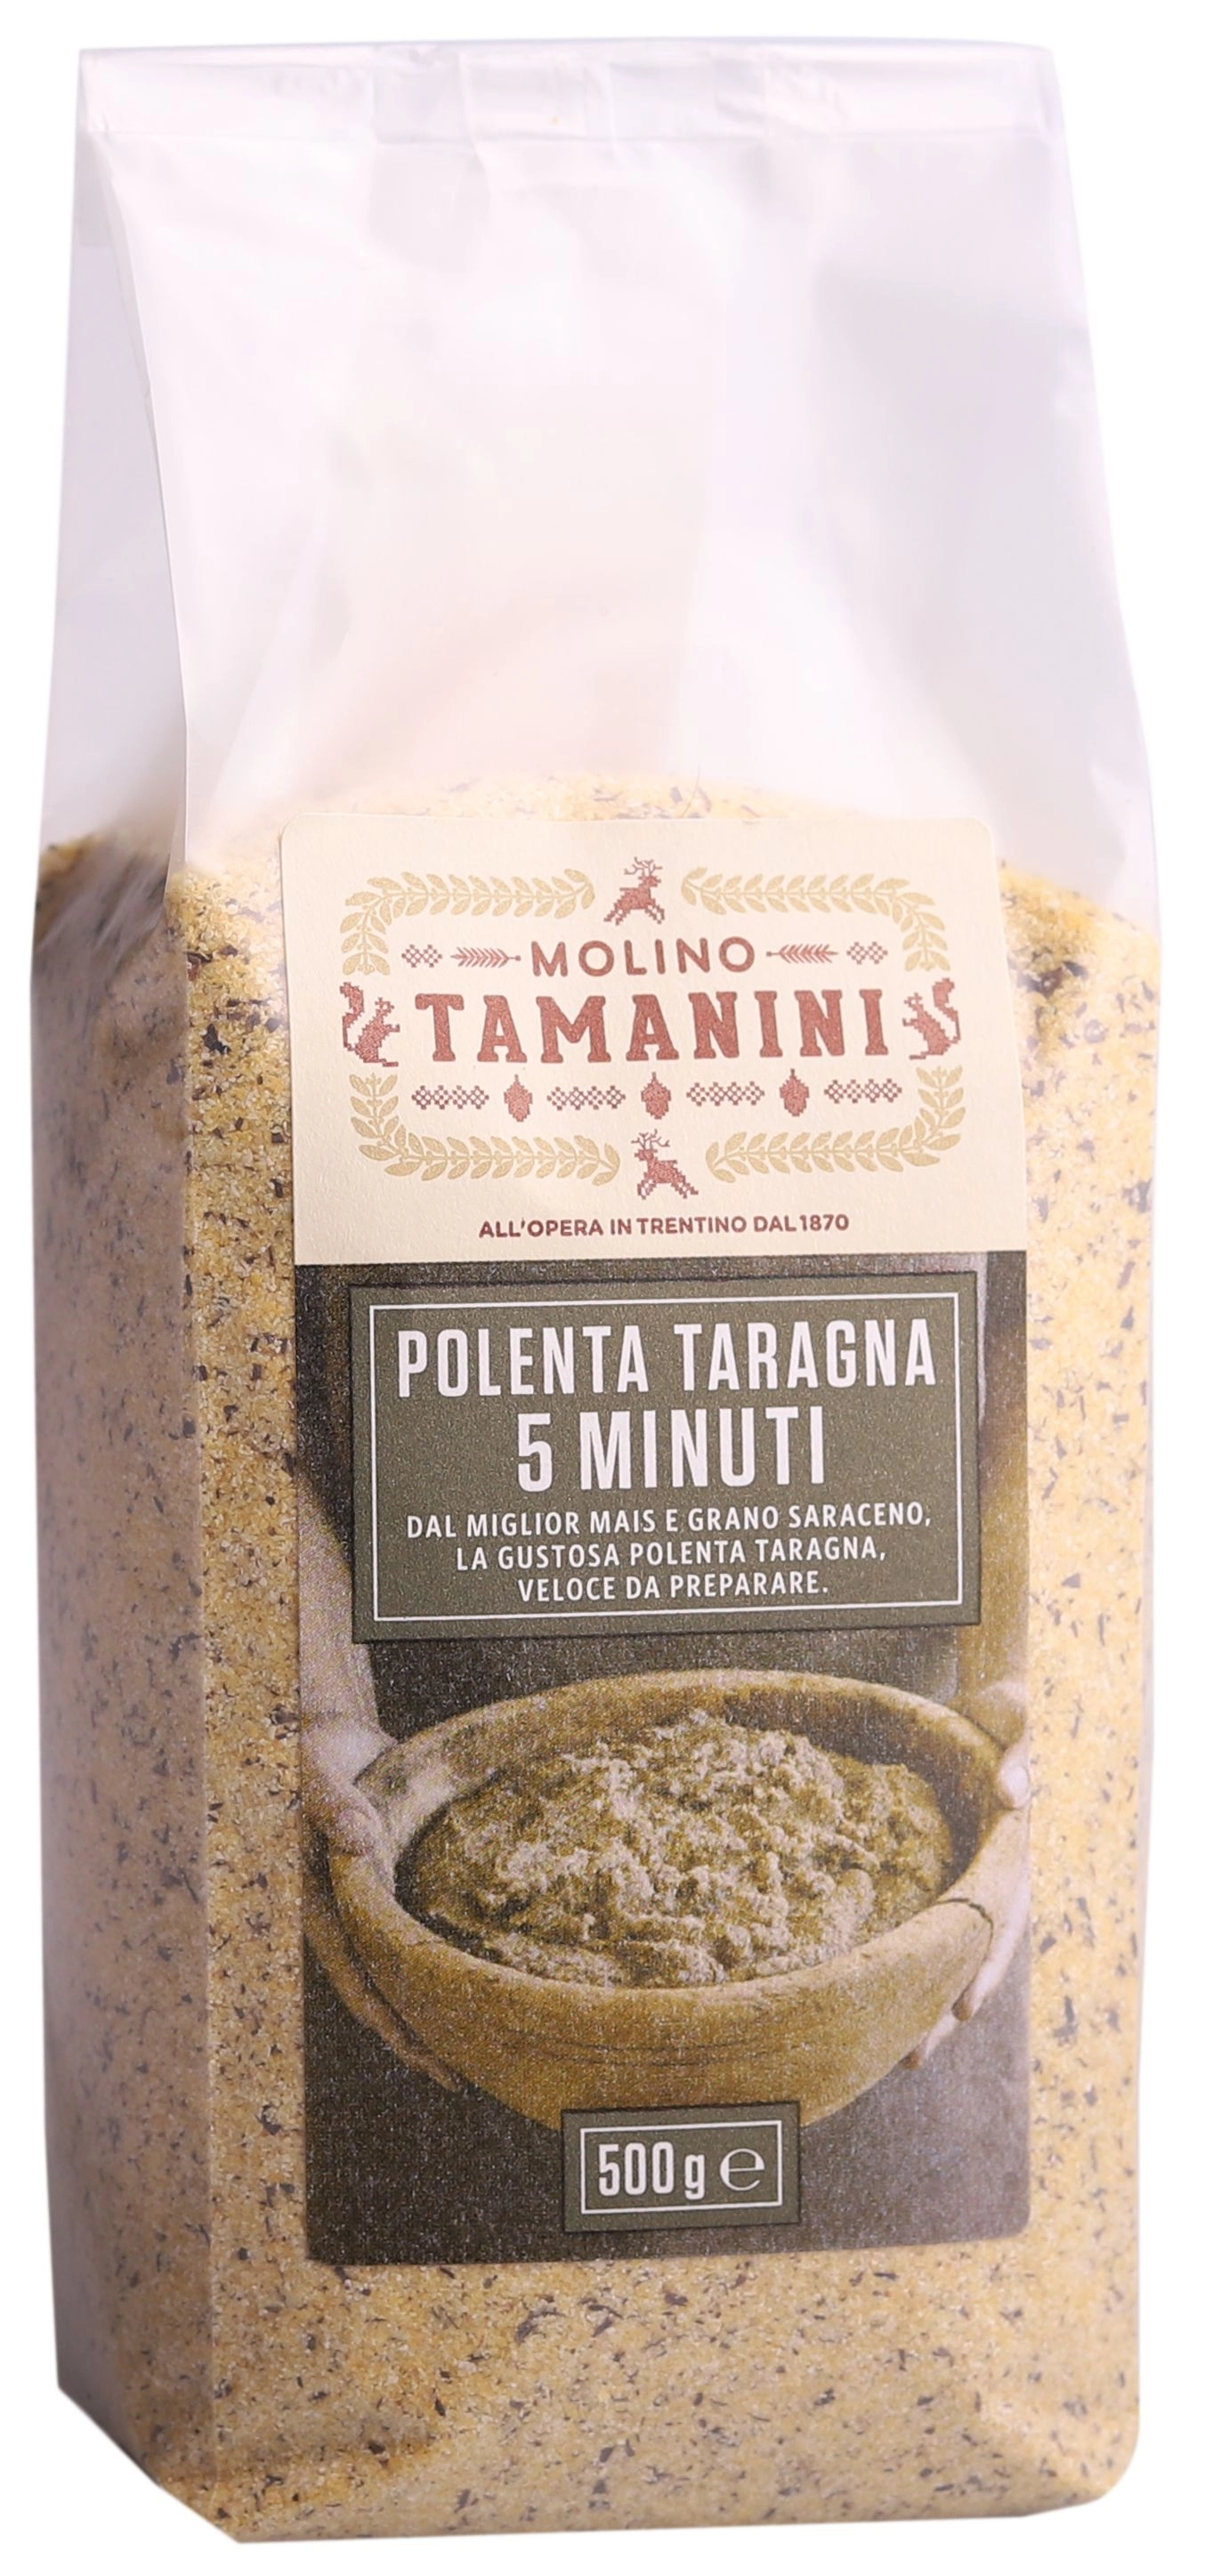 Polenta Taragna cornmeal 5 minutes